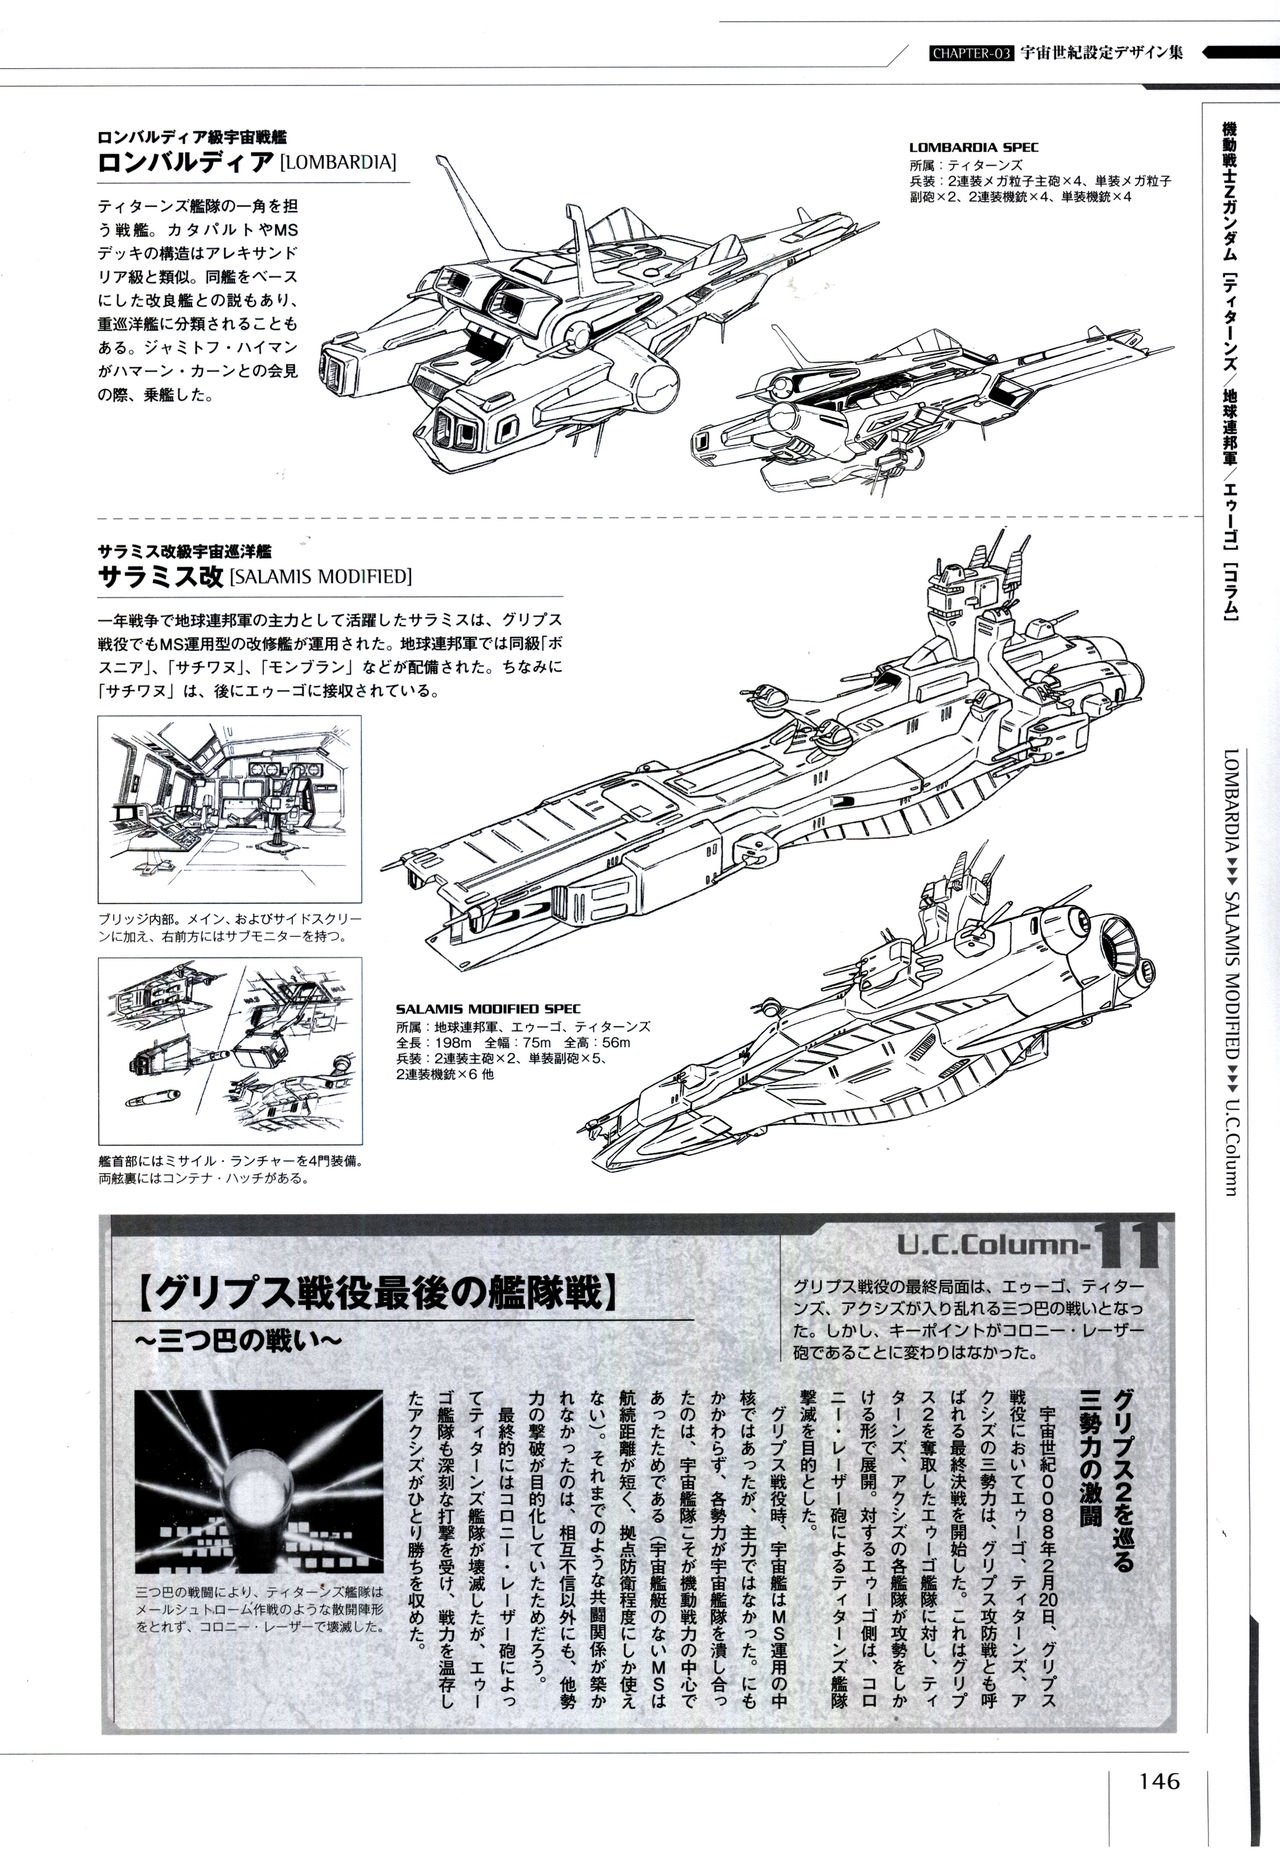 Mobile Suit Gundam - Ship & Aerospace Plane Encyclopedia - Revised Edition 151